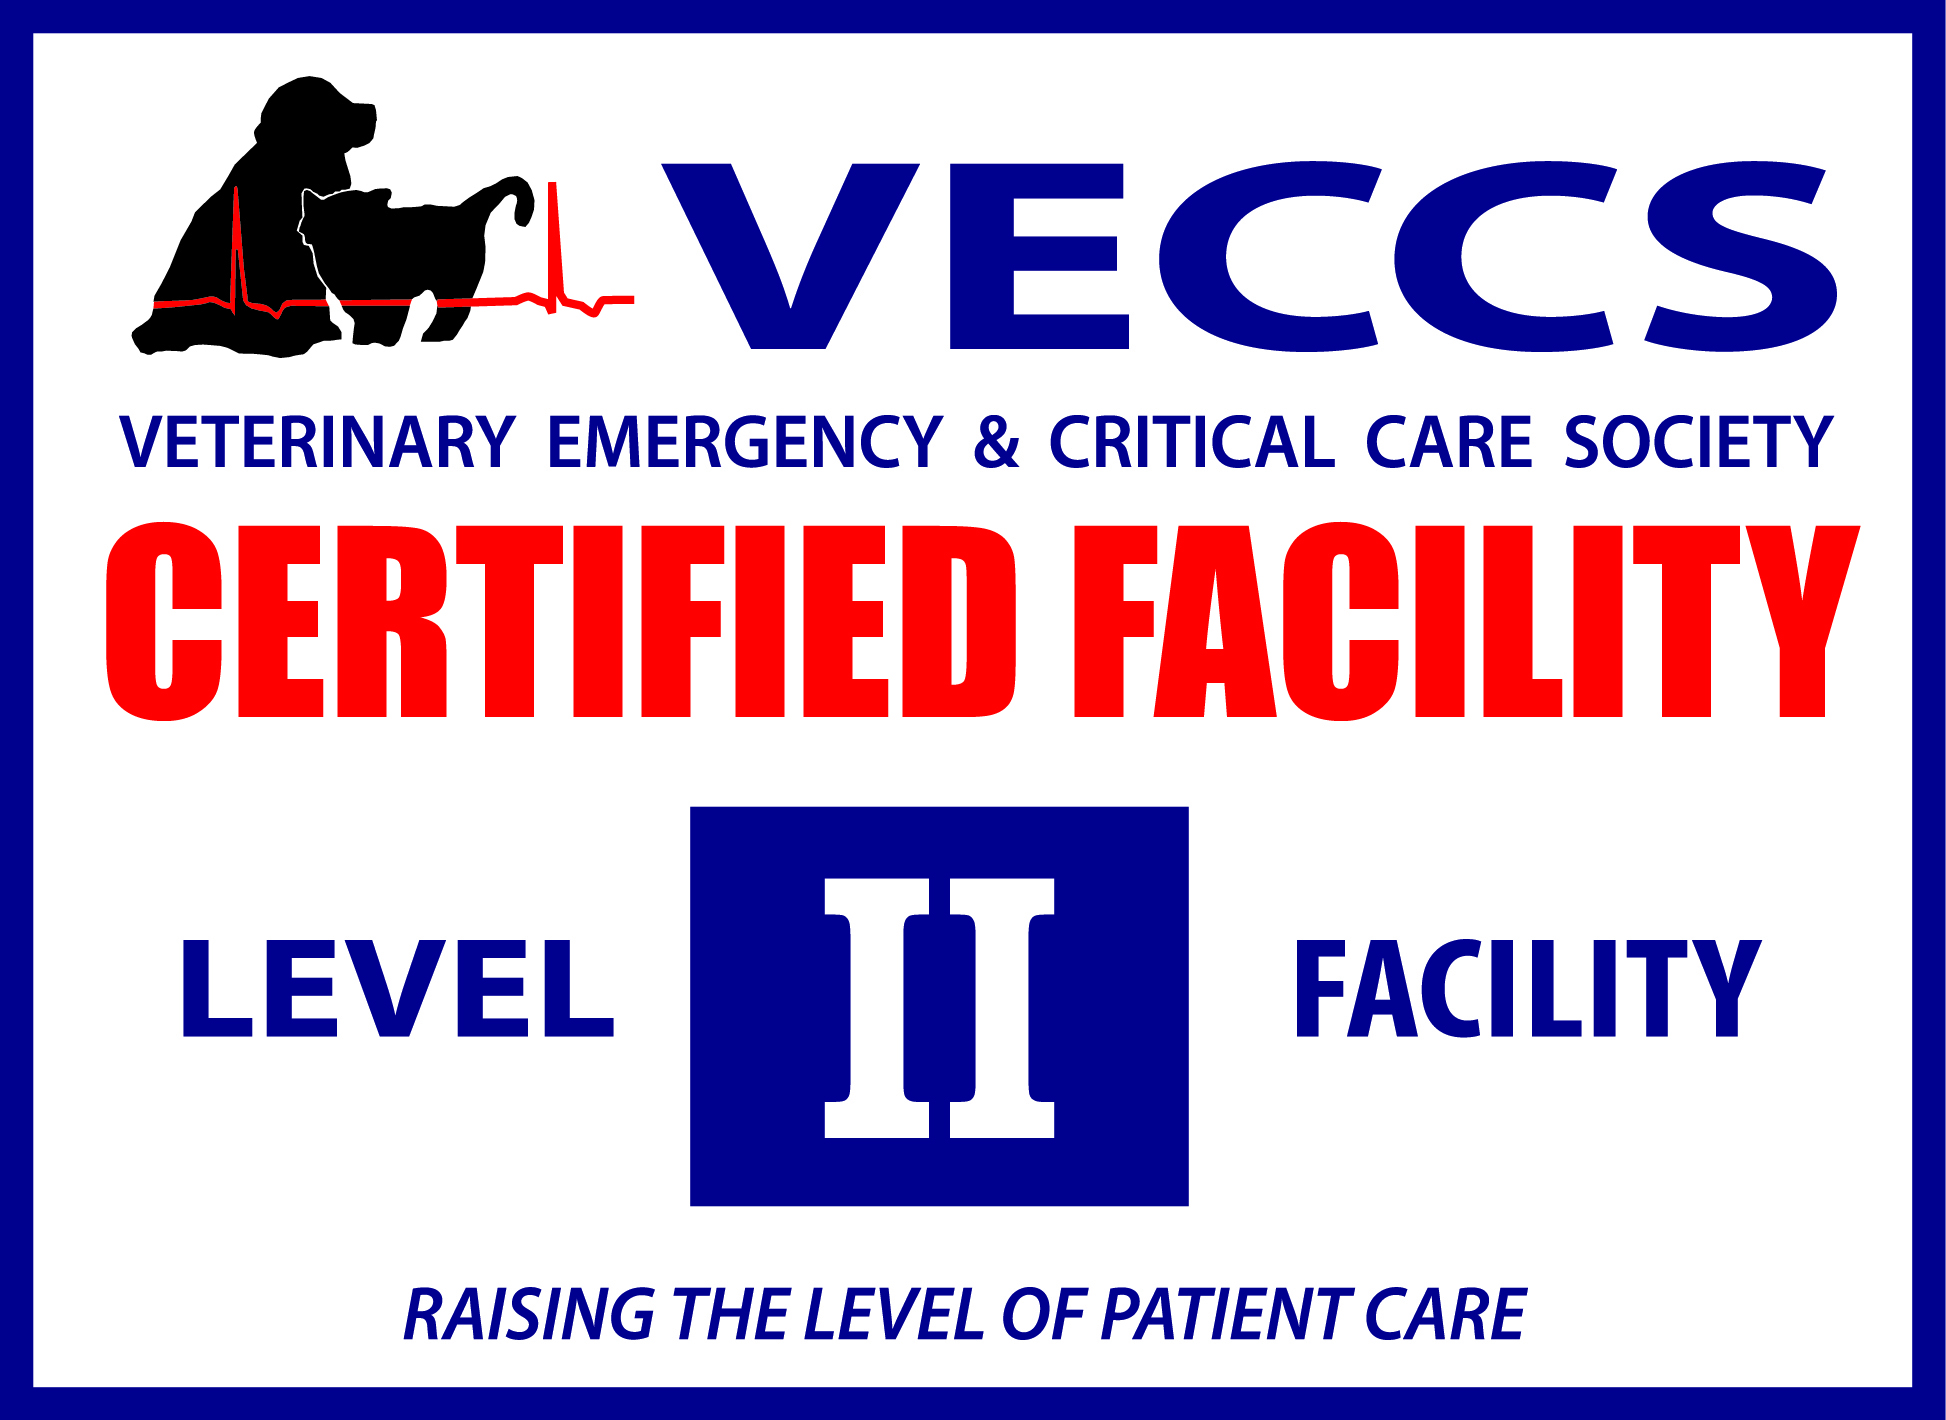 VECCS Level 2 Facility